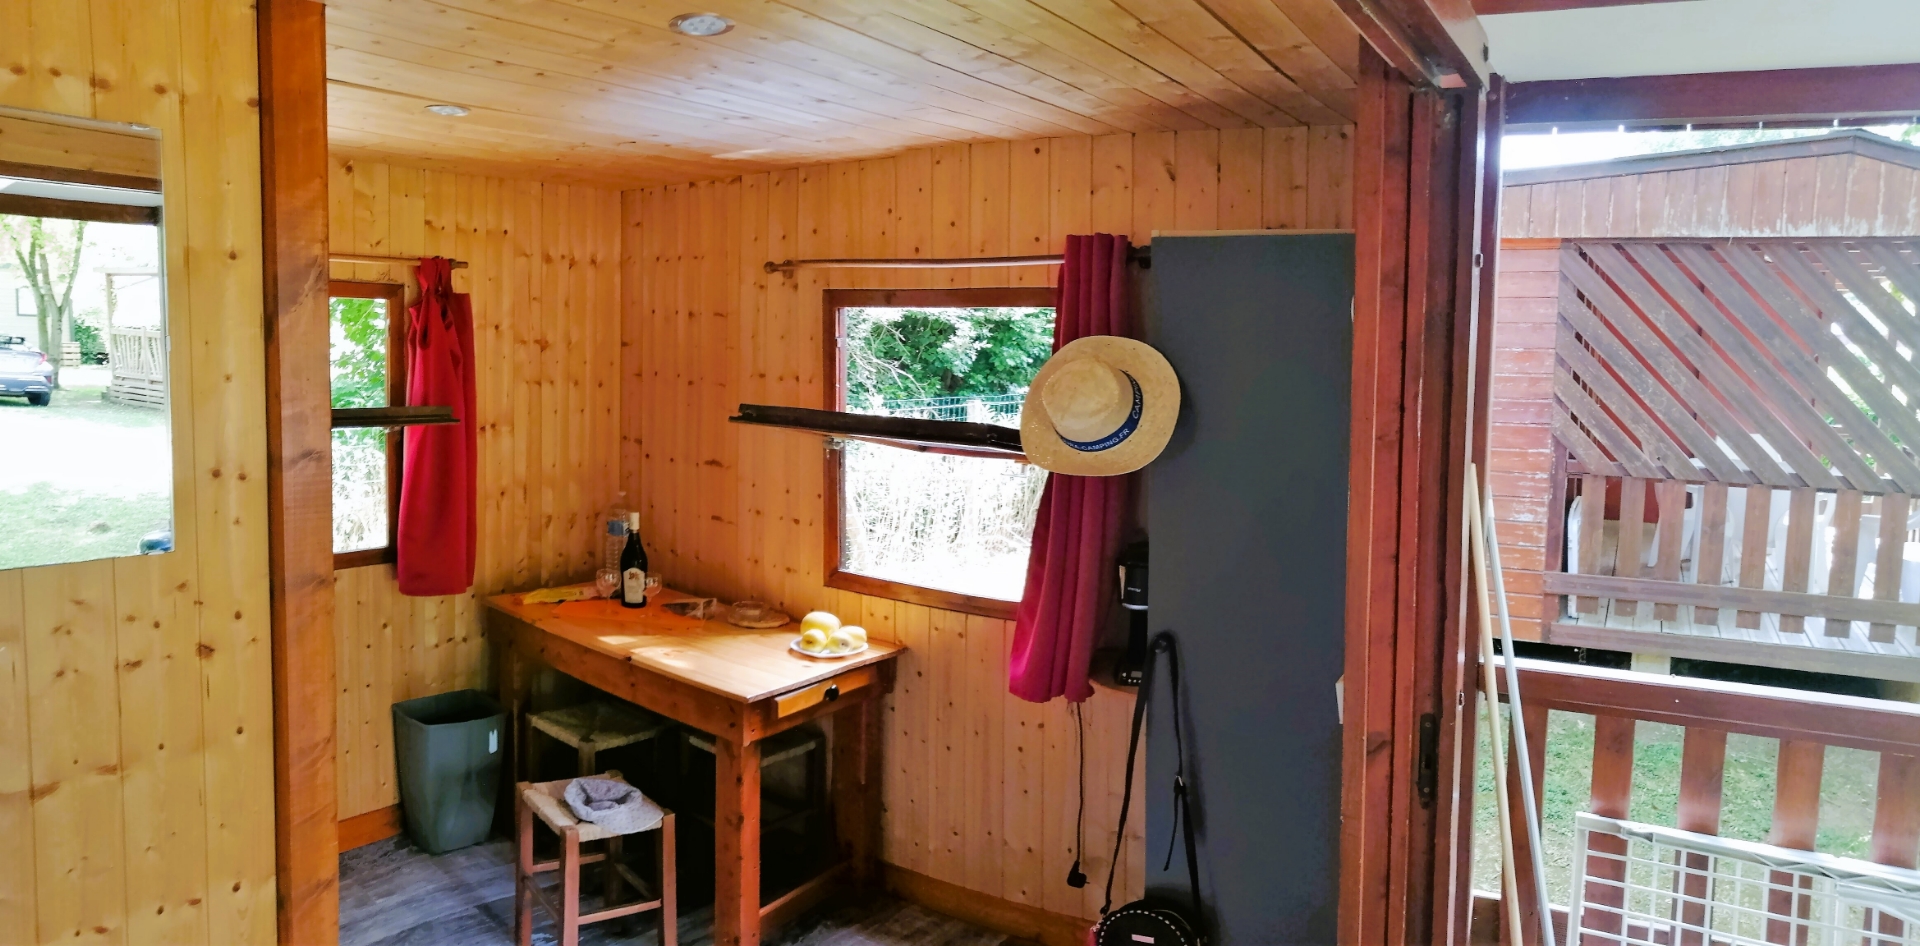 Kitchen area - dining room in the Petit Chalet to rent at Les Bords de Loue campsite in the Bourgogne-Franche-Comté region